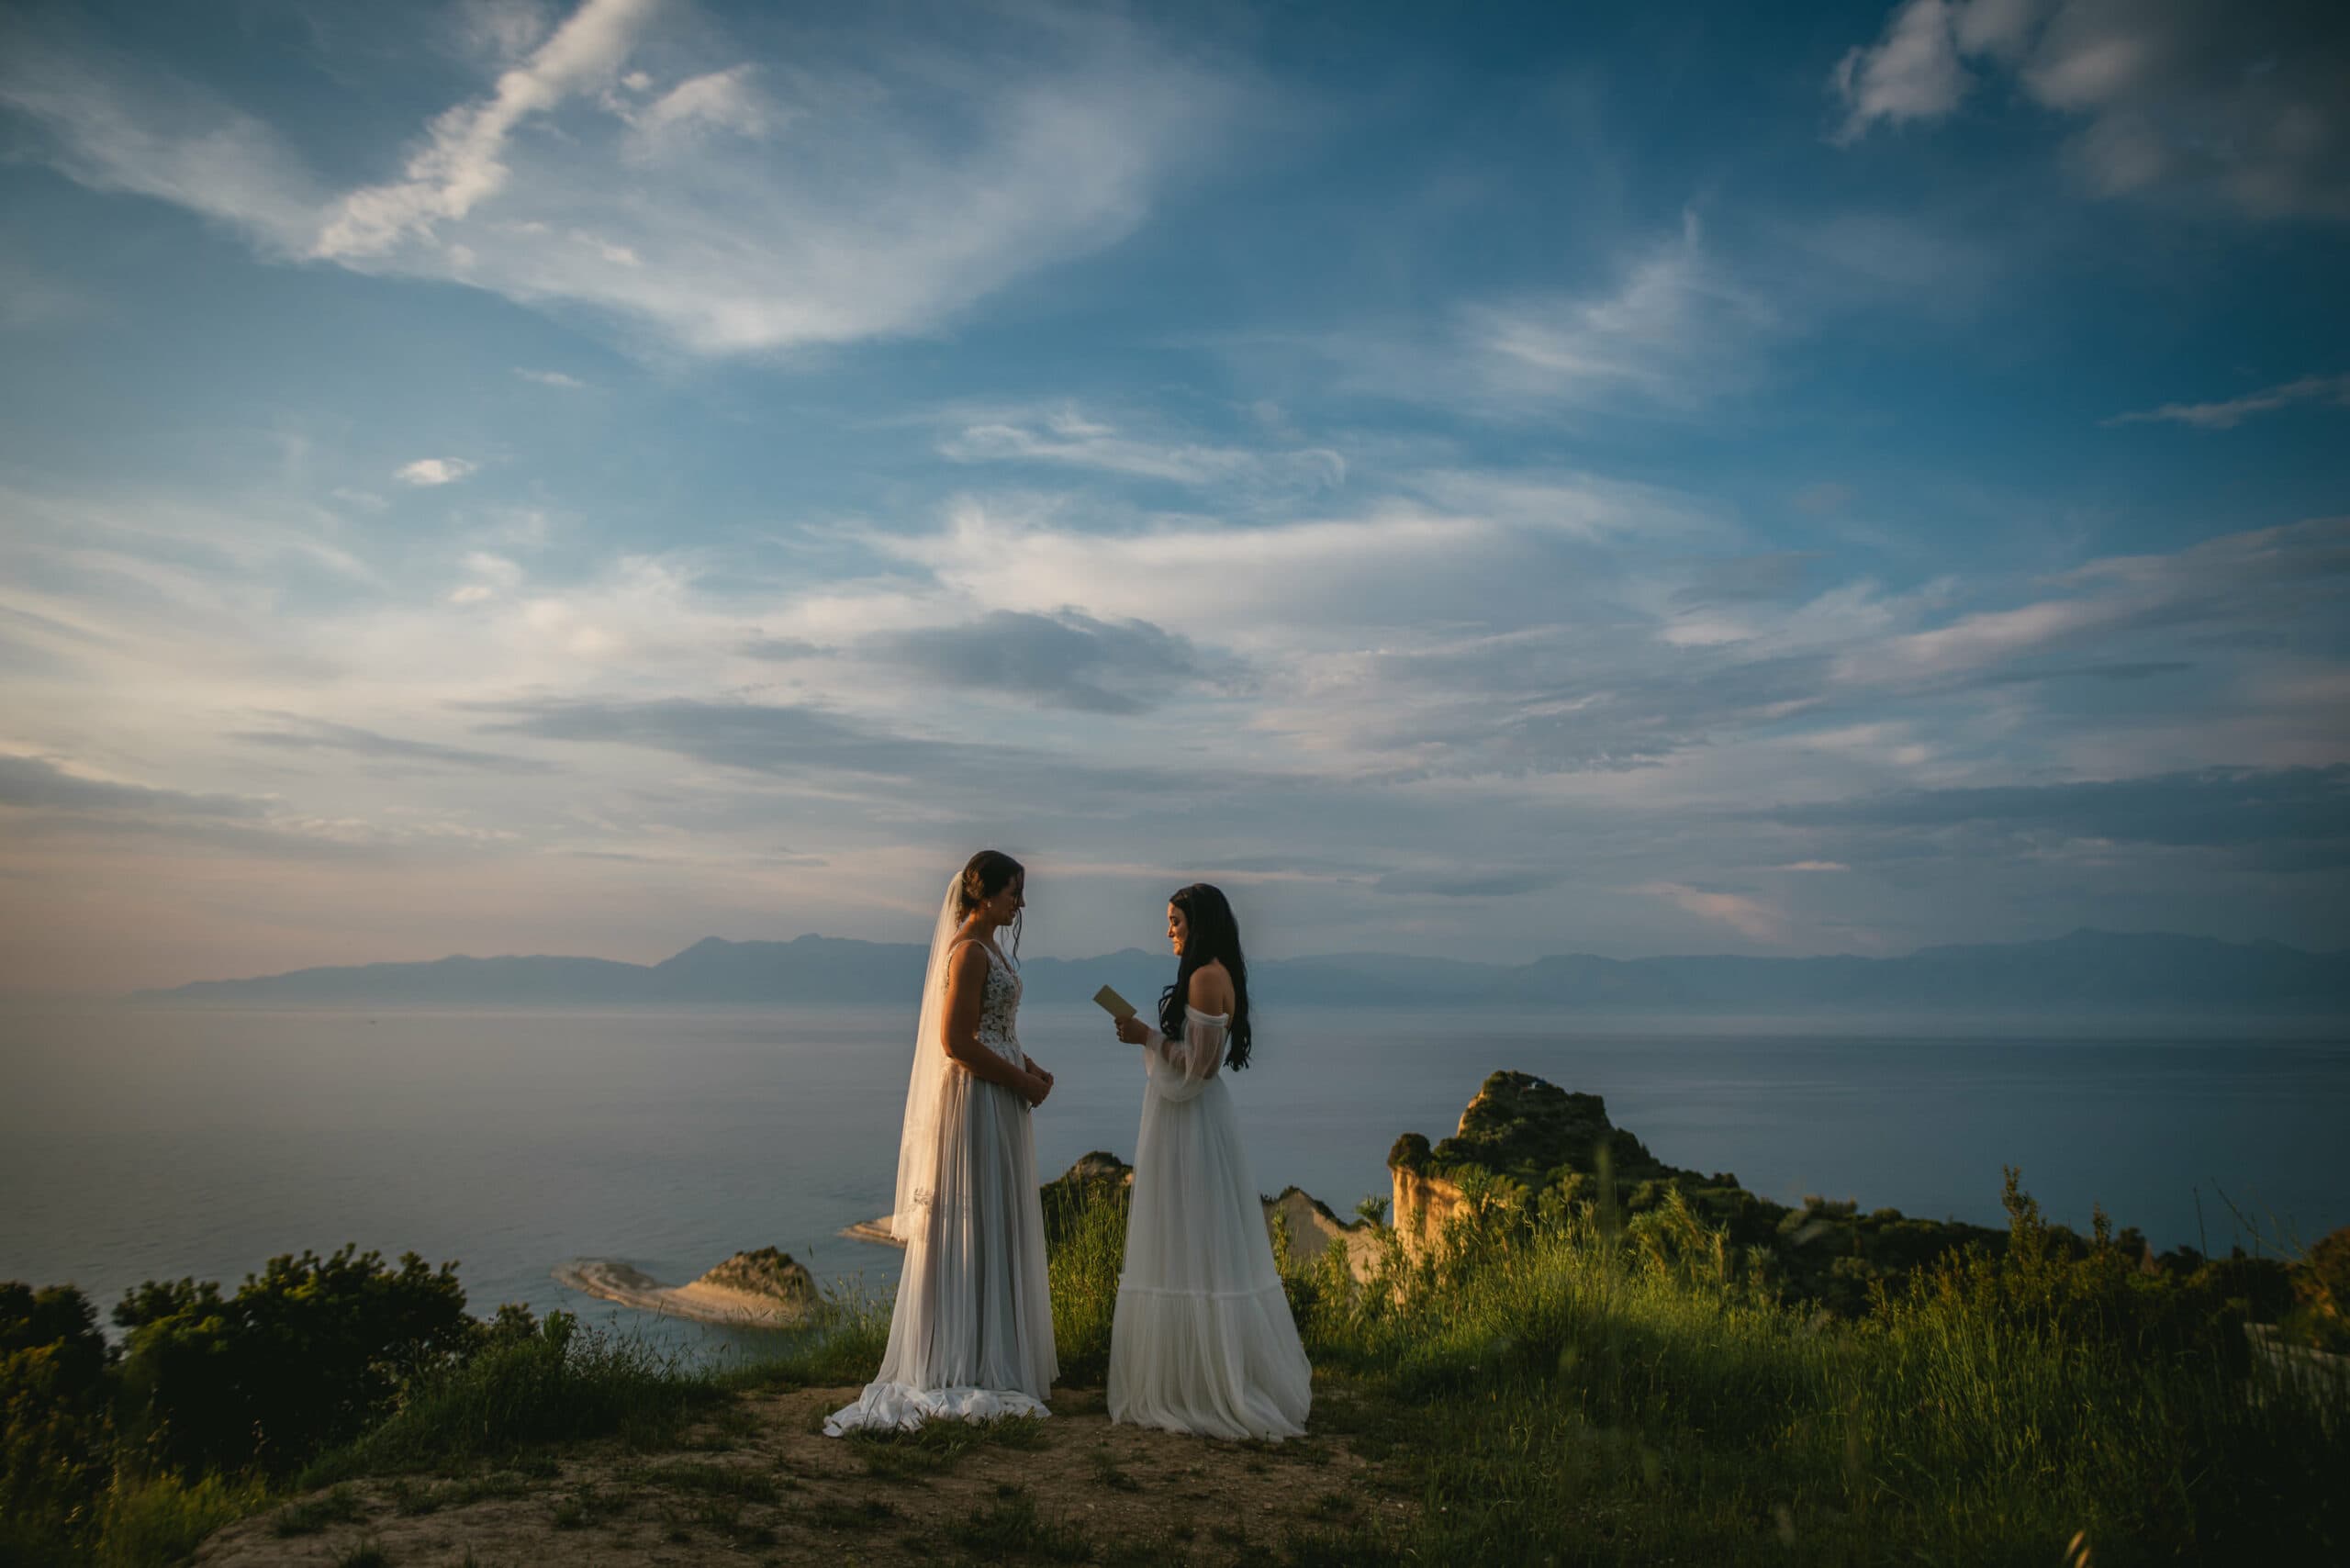 Vows spoken against the backdrop of a beautiful Corfu landscape.